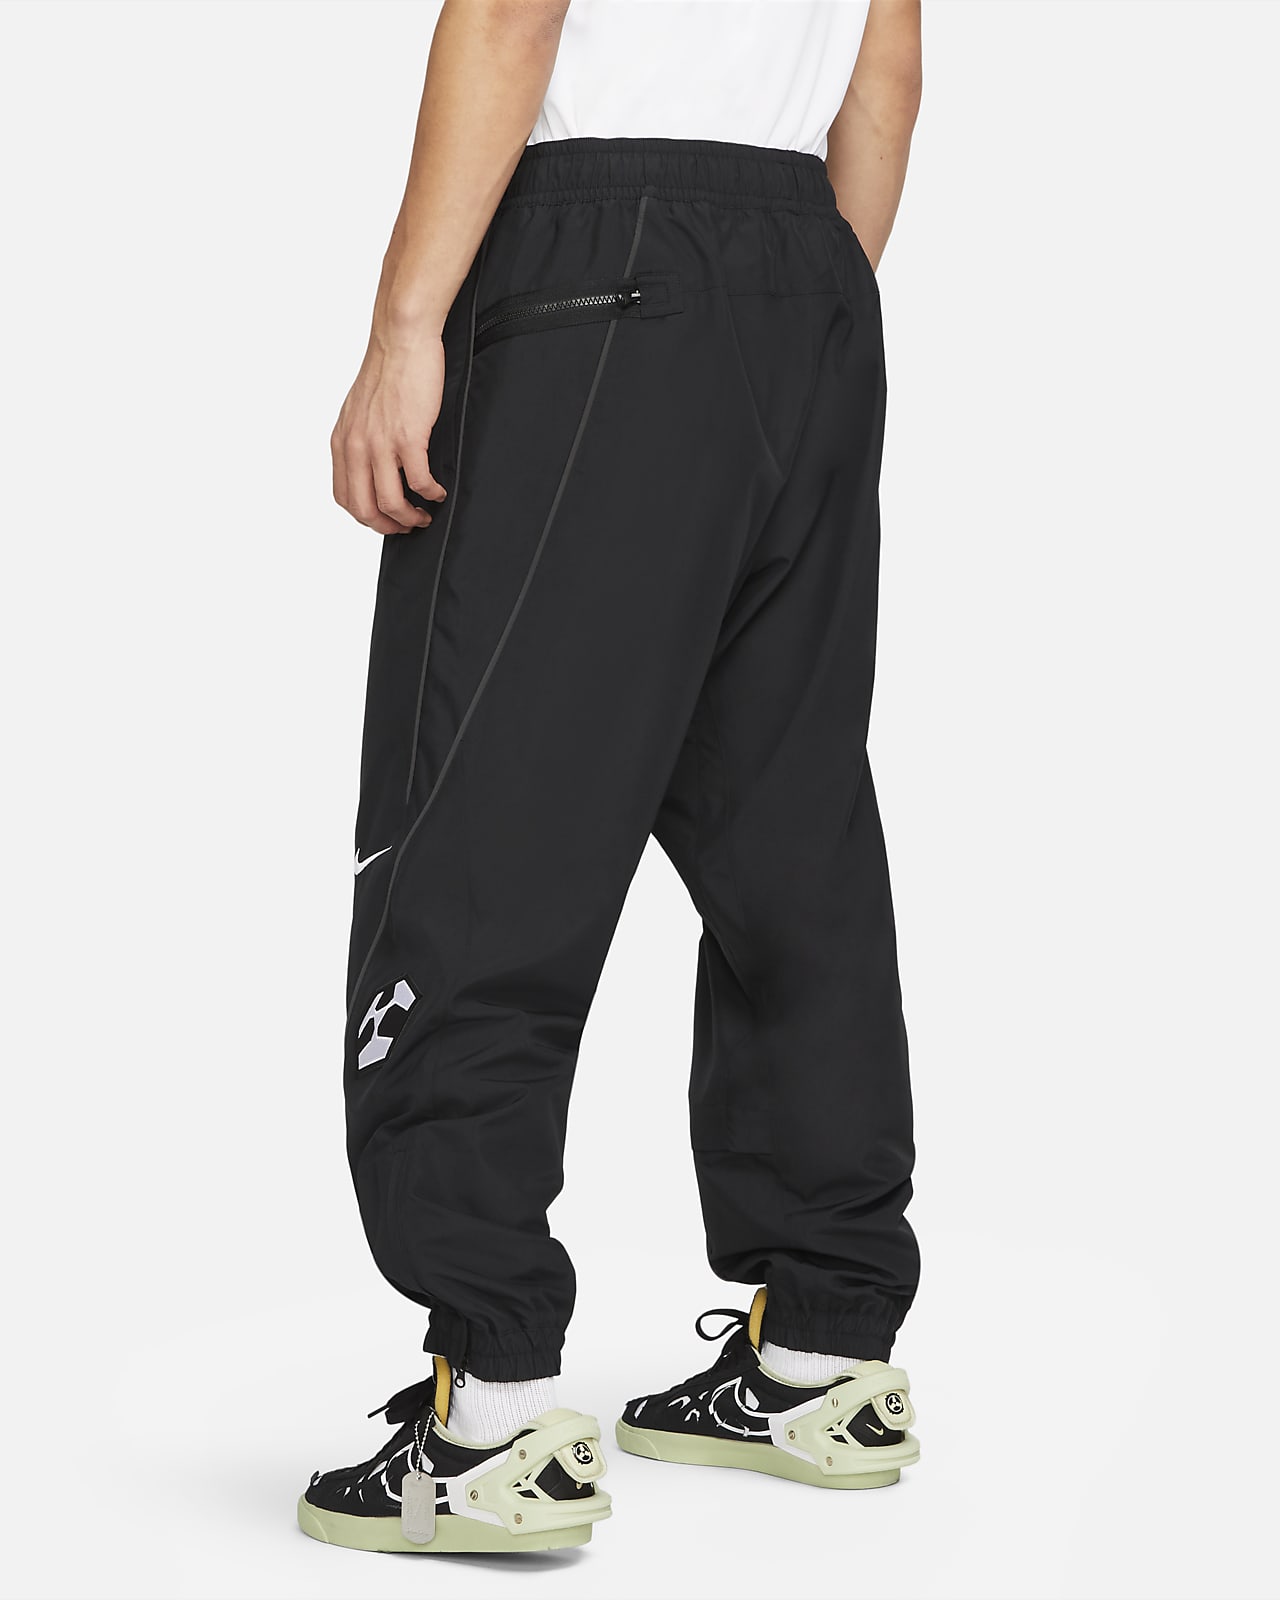 Nike x ACRONYM® Men's Woven Pants. Nike.com